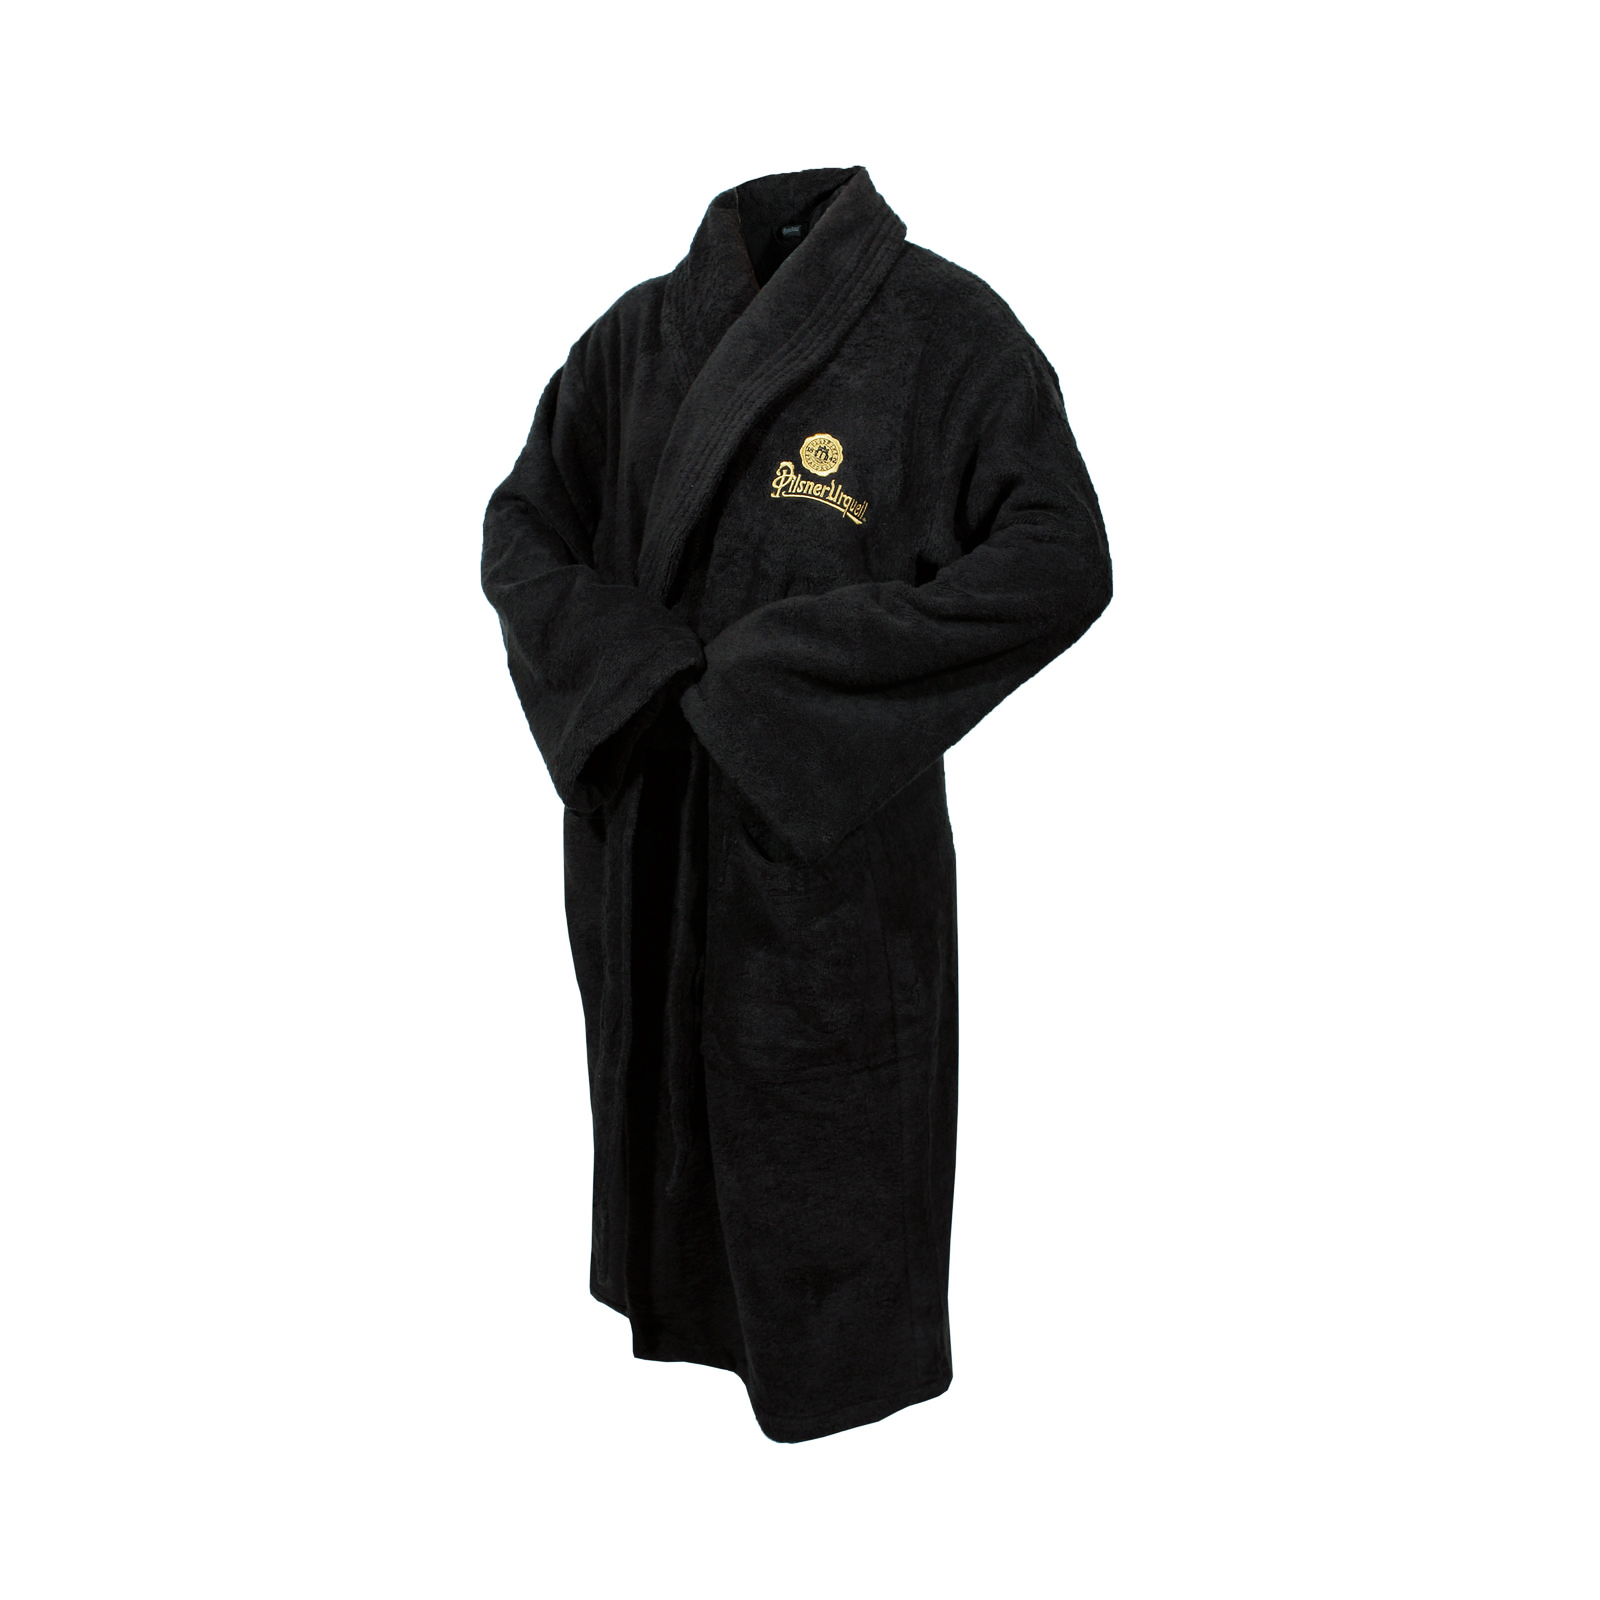 Pilsner Urquell black bathrobe